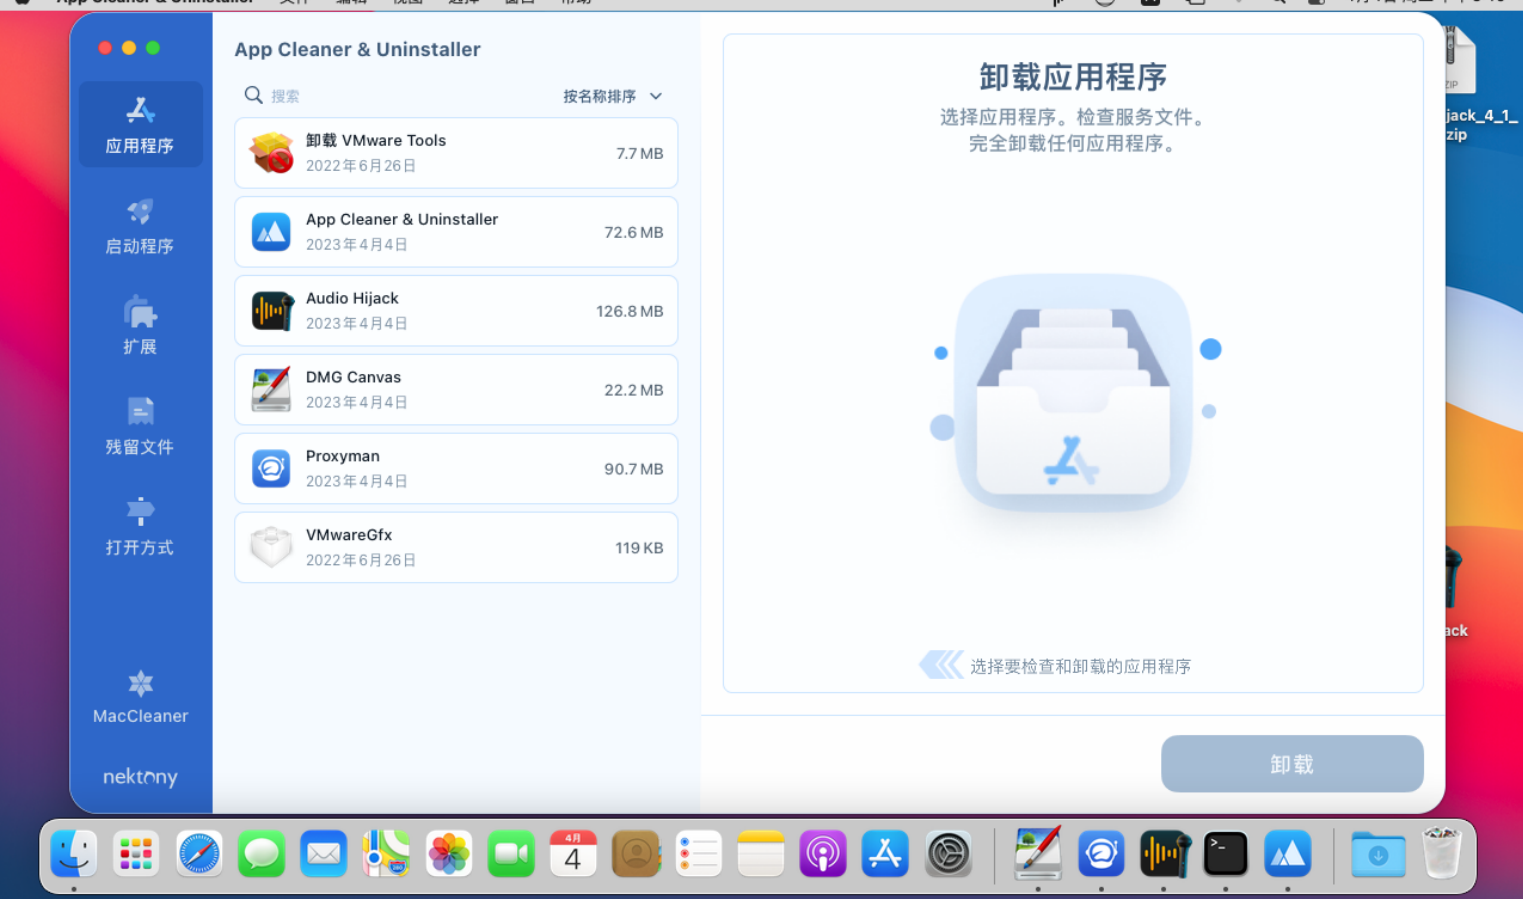 App Cleaner & Uninstaller 8.2.4 for Mac 苹果电脑系统软件卸载 清理破解版下载插图